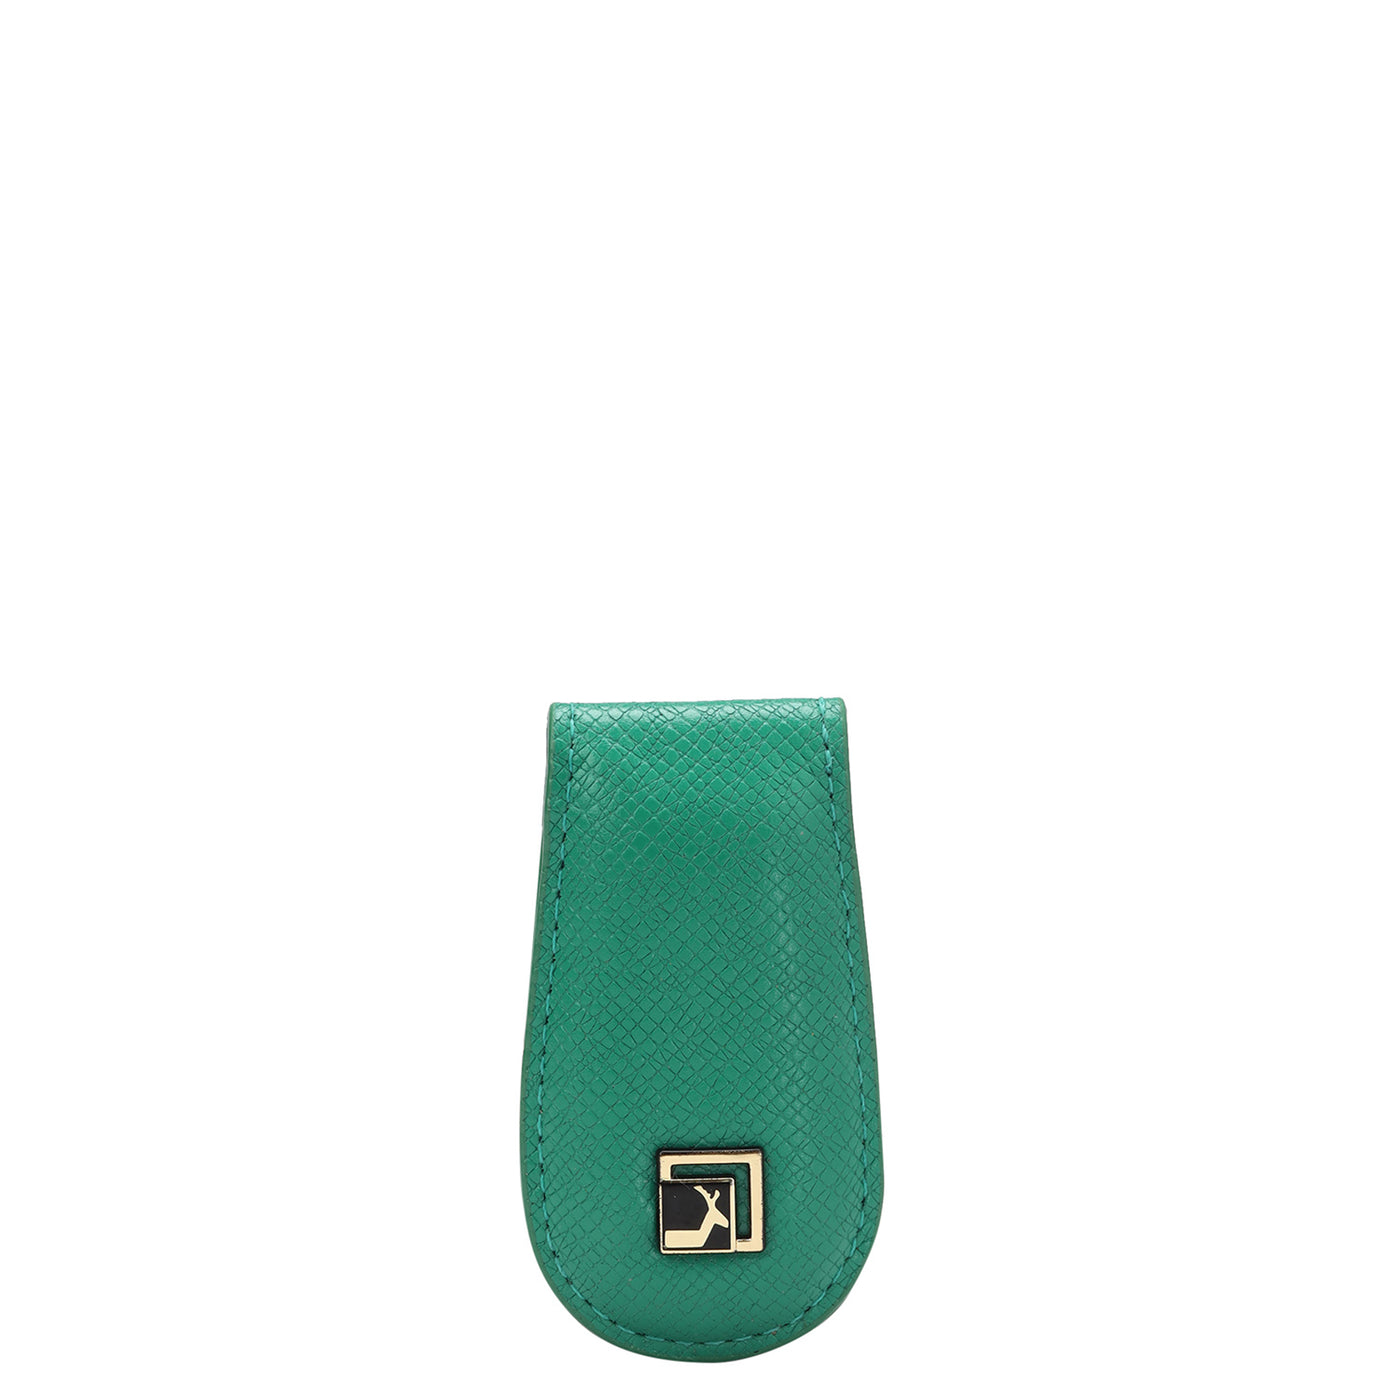 Franzy Leather Money Clip - Emerald Green